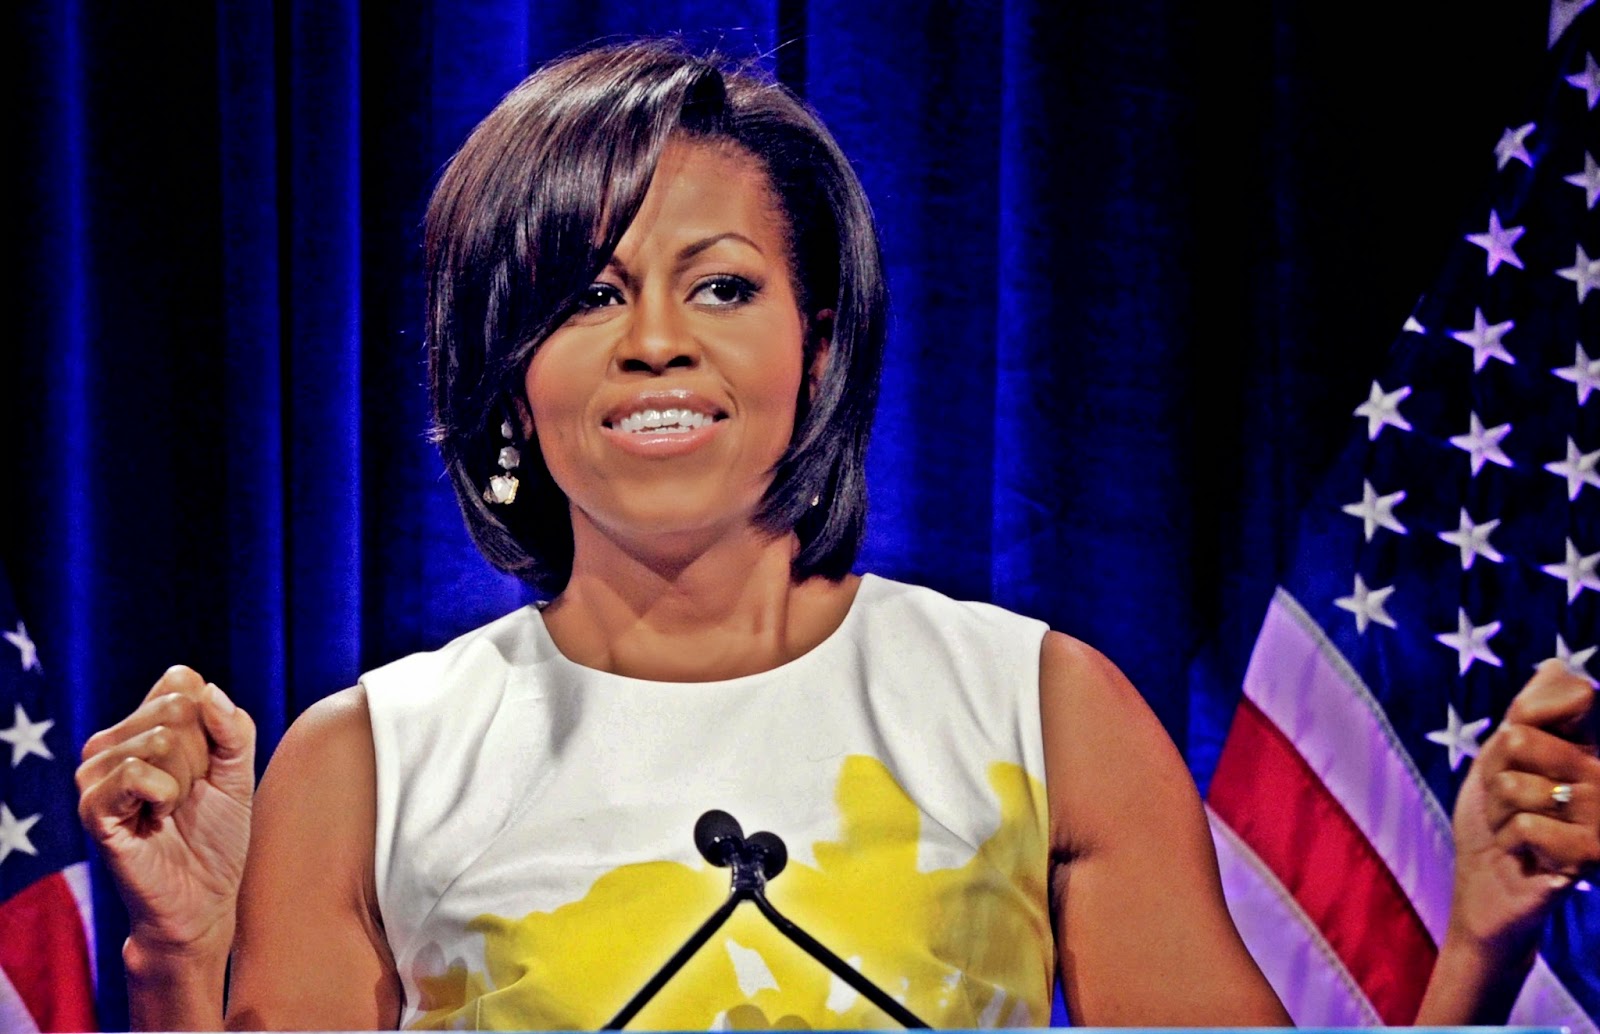 Michelle Obama Wallpaper - WallpaperSafari